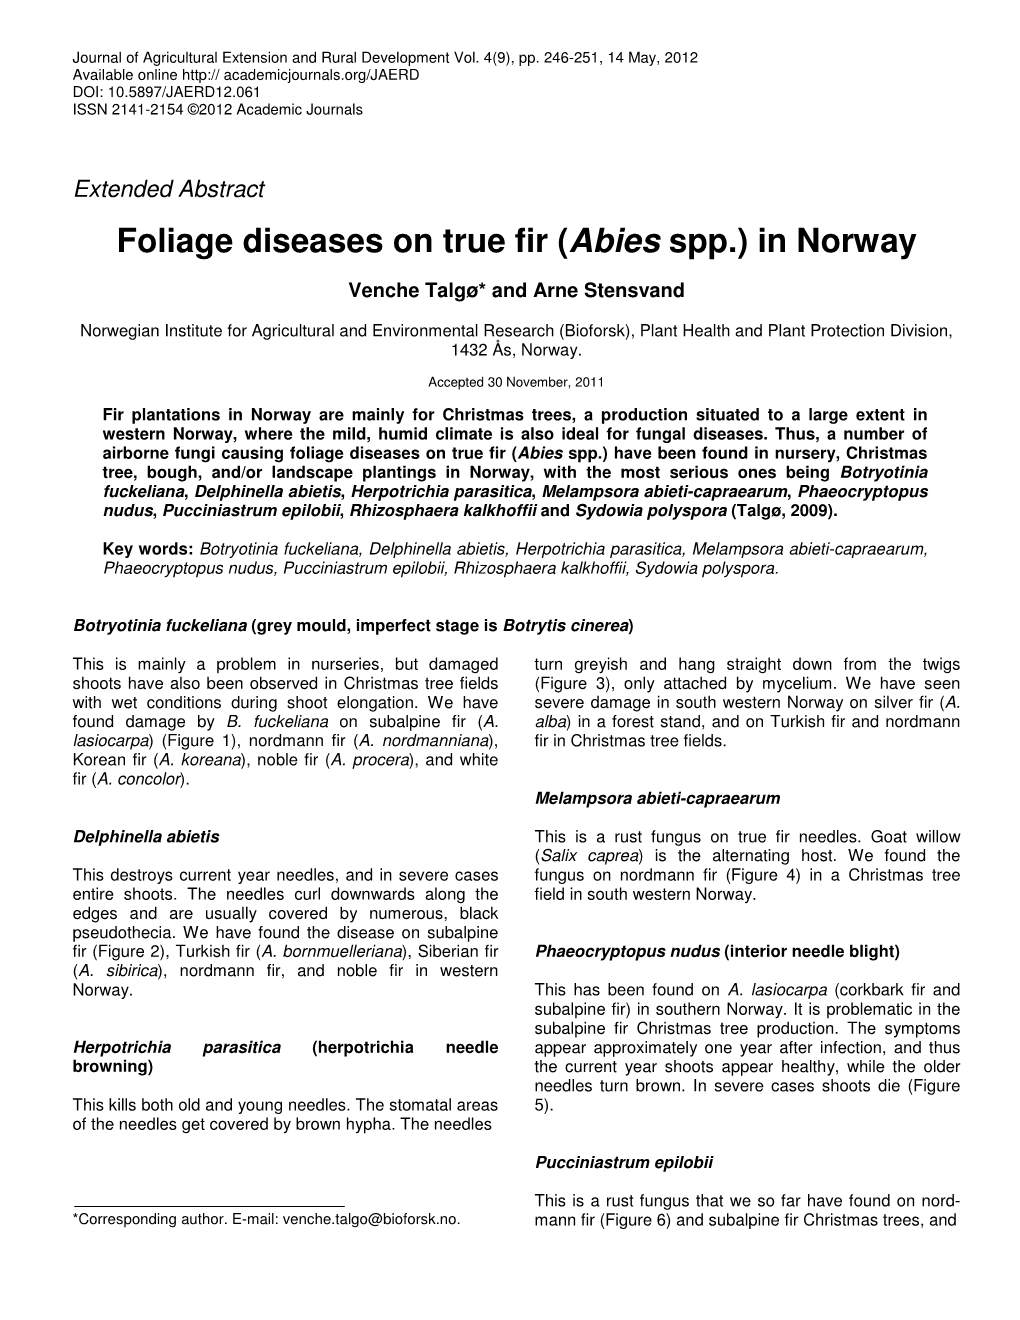 Foliage Diseases on True Fir (Abies Spp.) in Norway